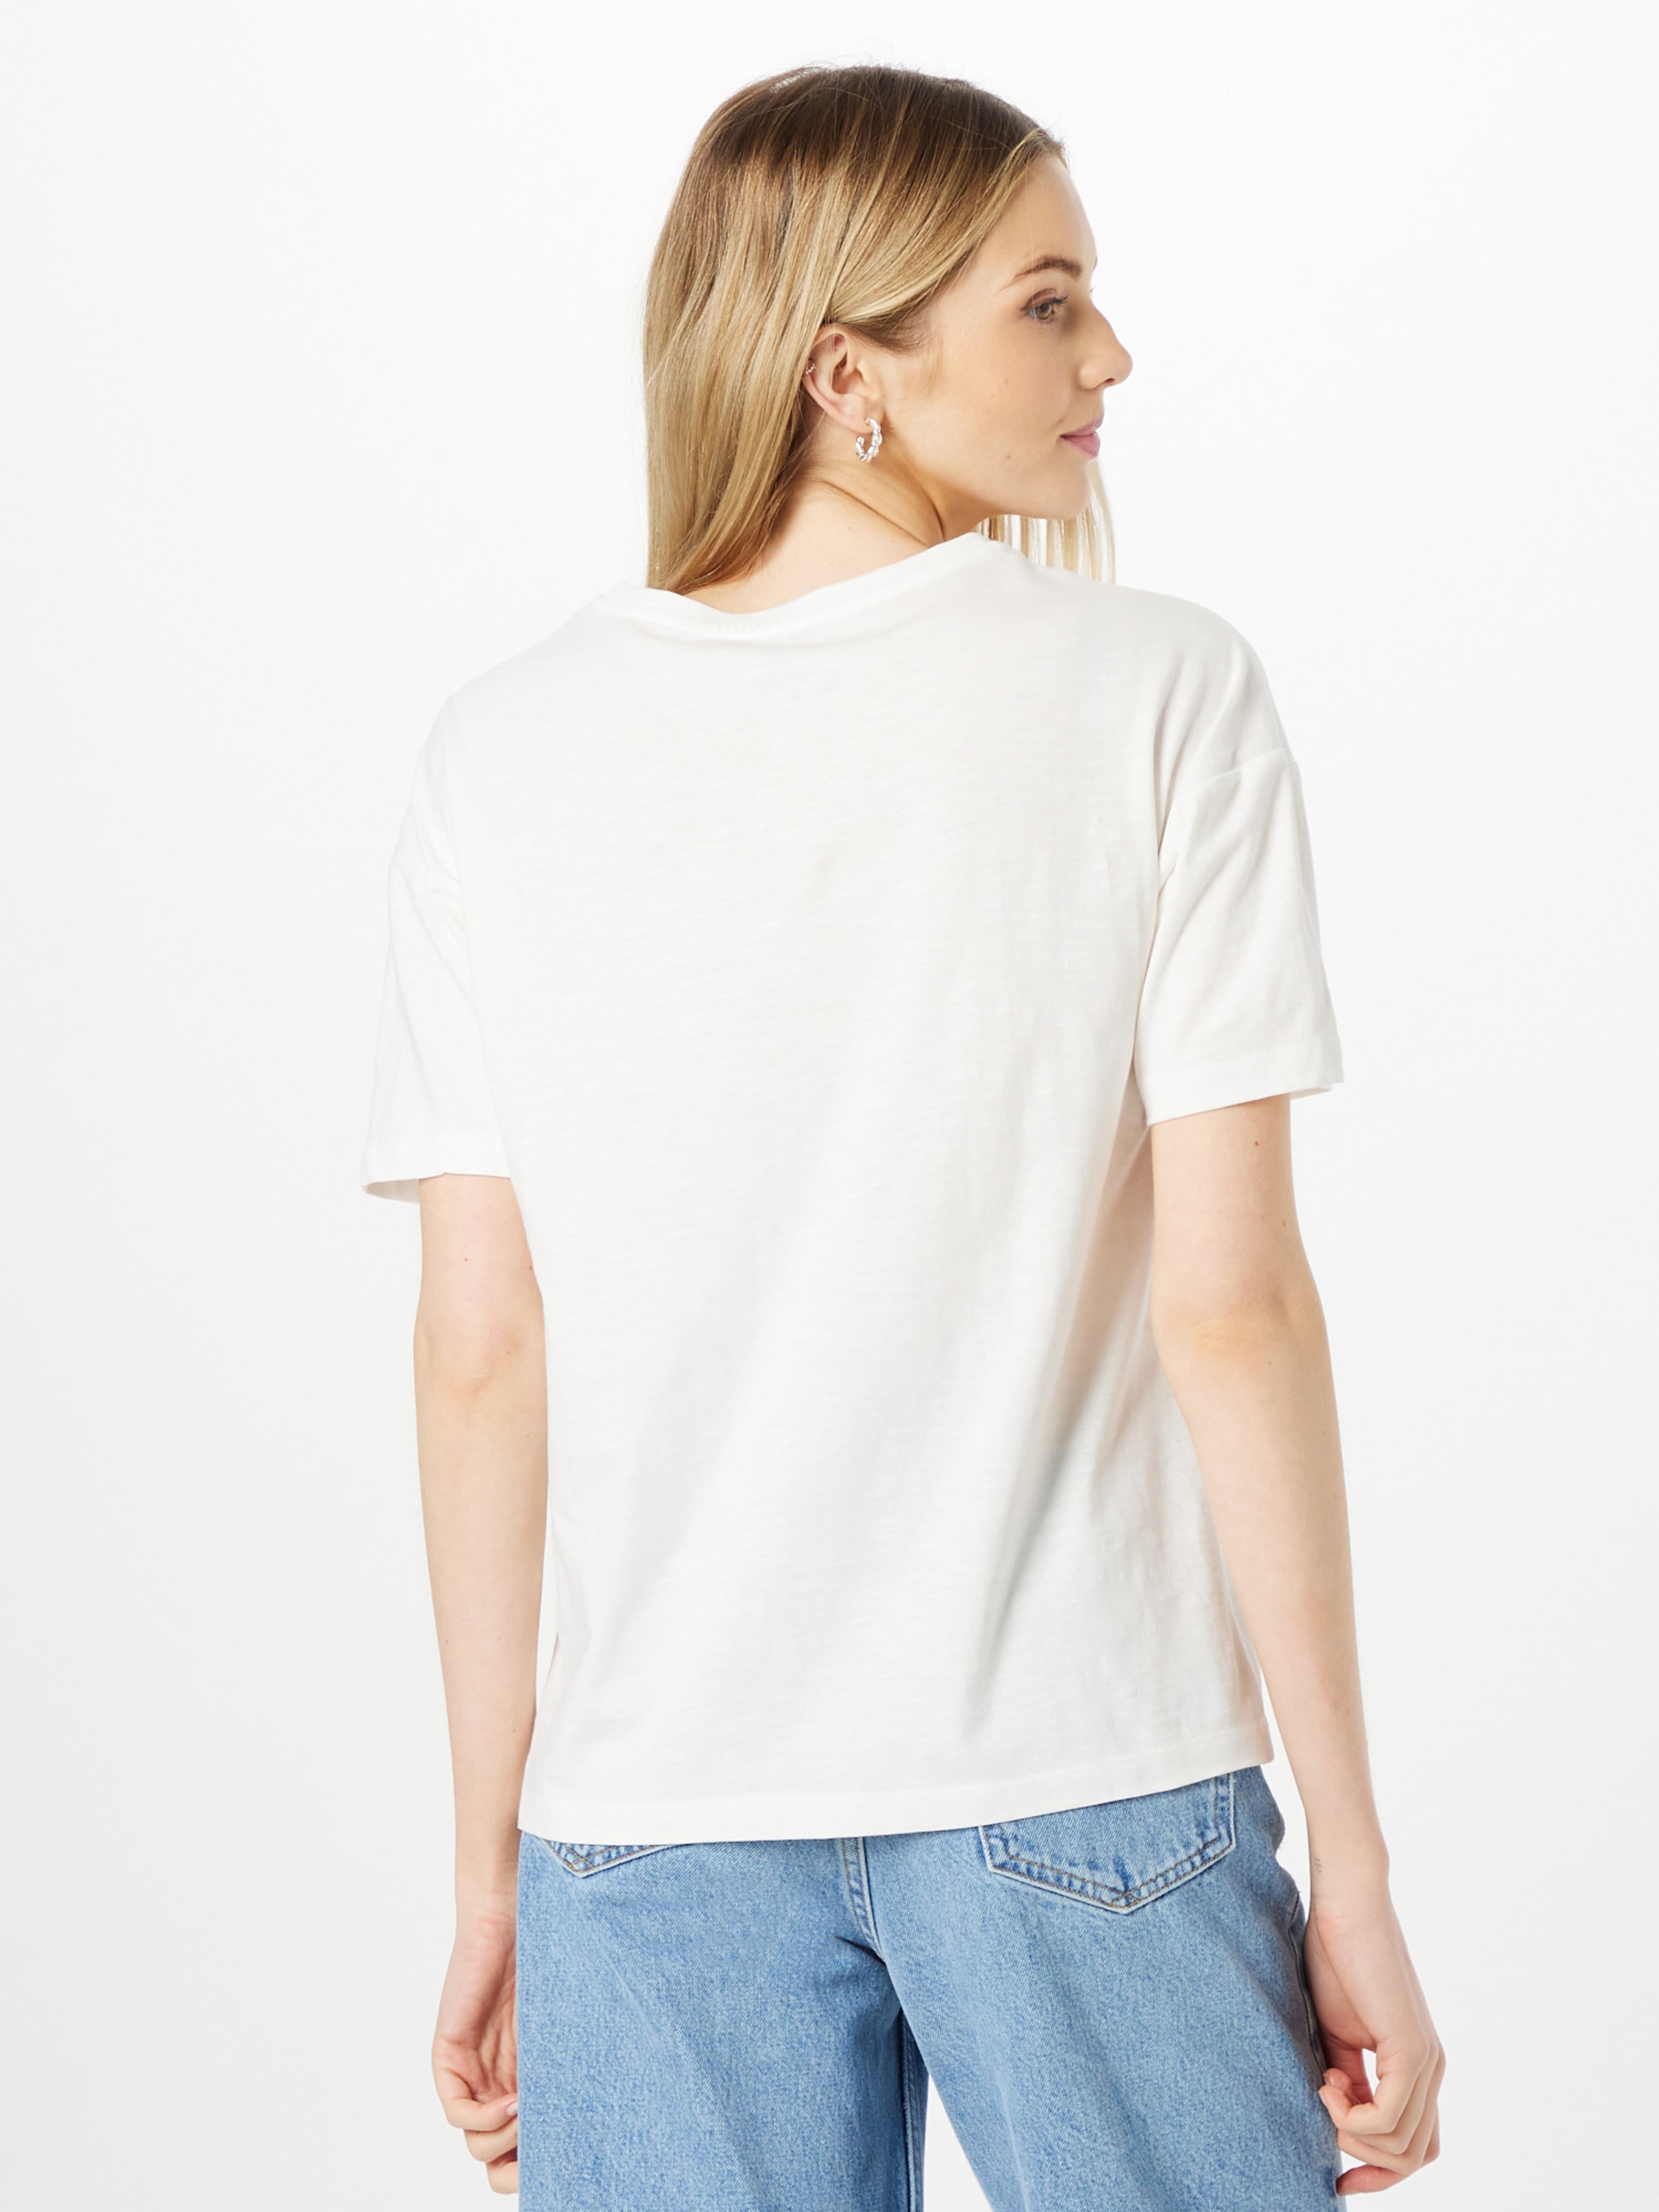 Frauen Shirts & Tops Cartoon T-Shirt in Weiß - TY05147